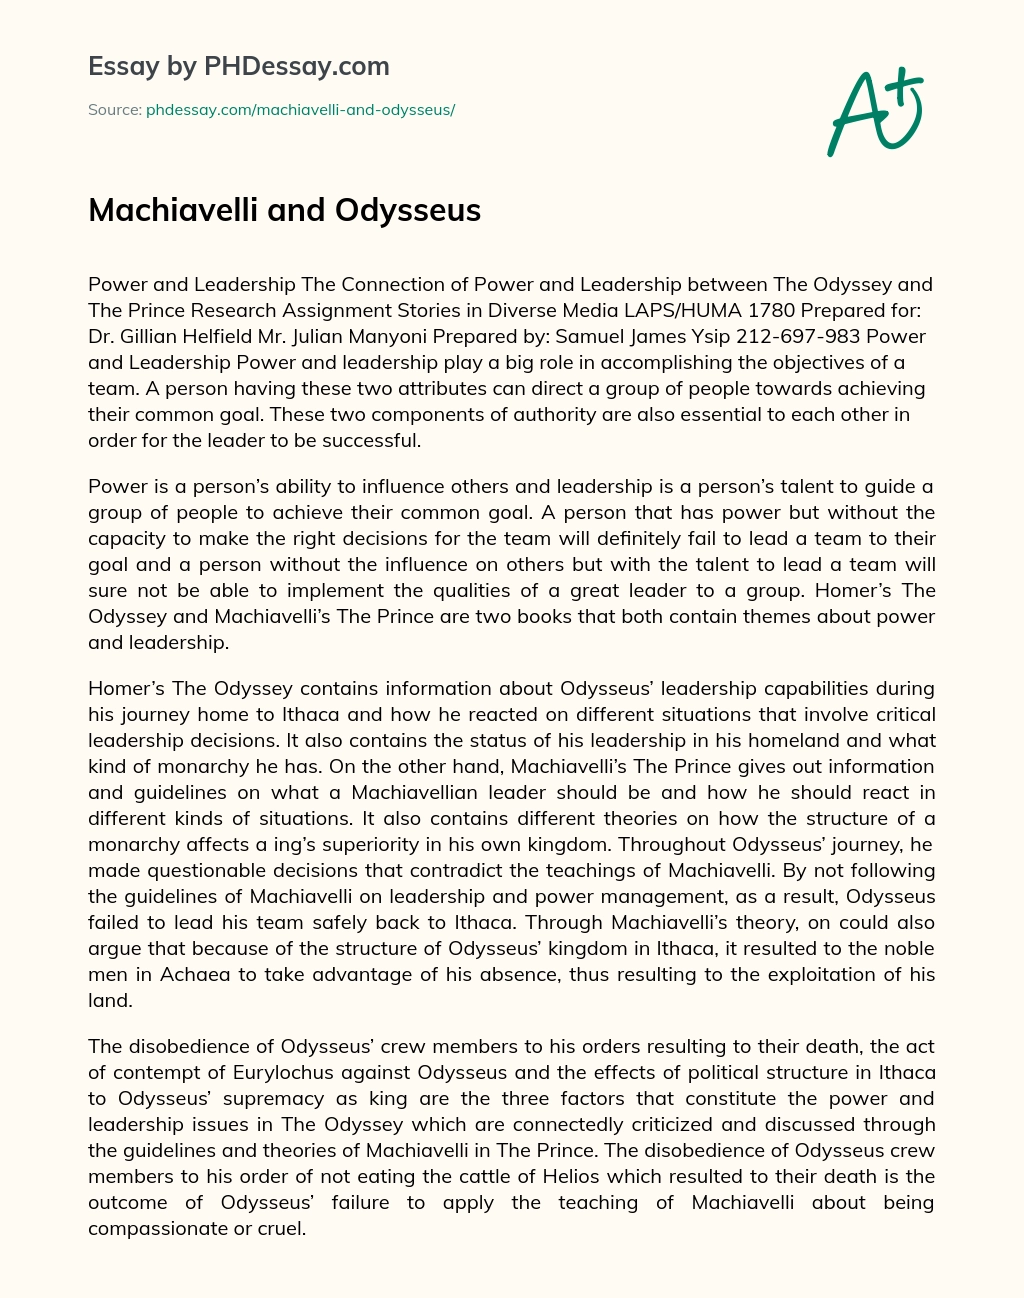 Machiavelli and Odysseus essay